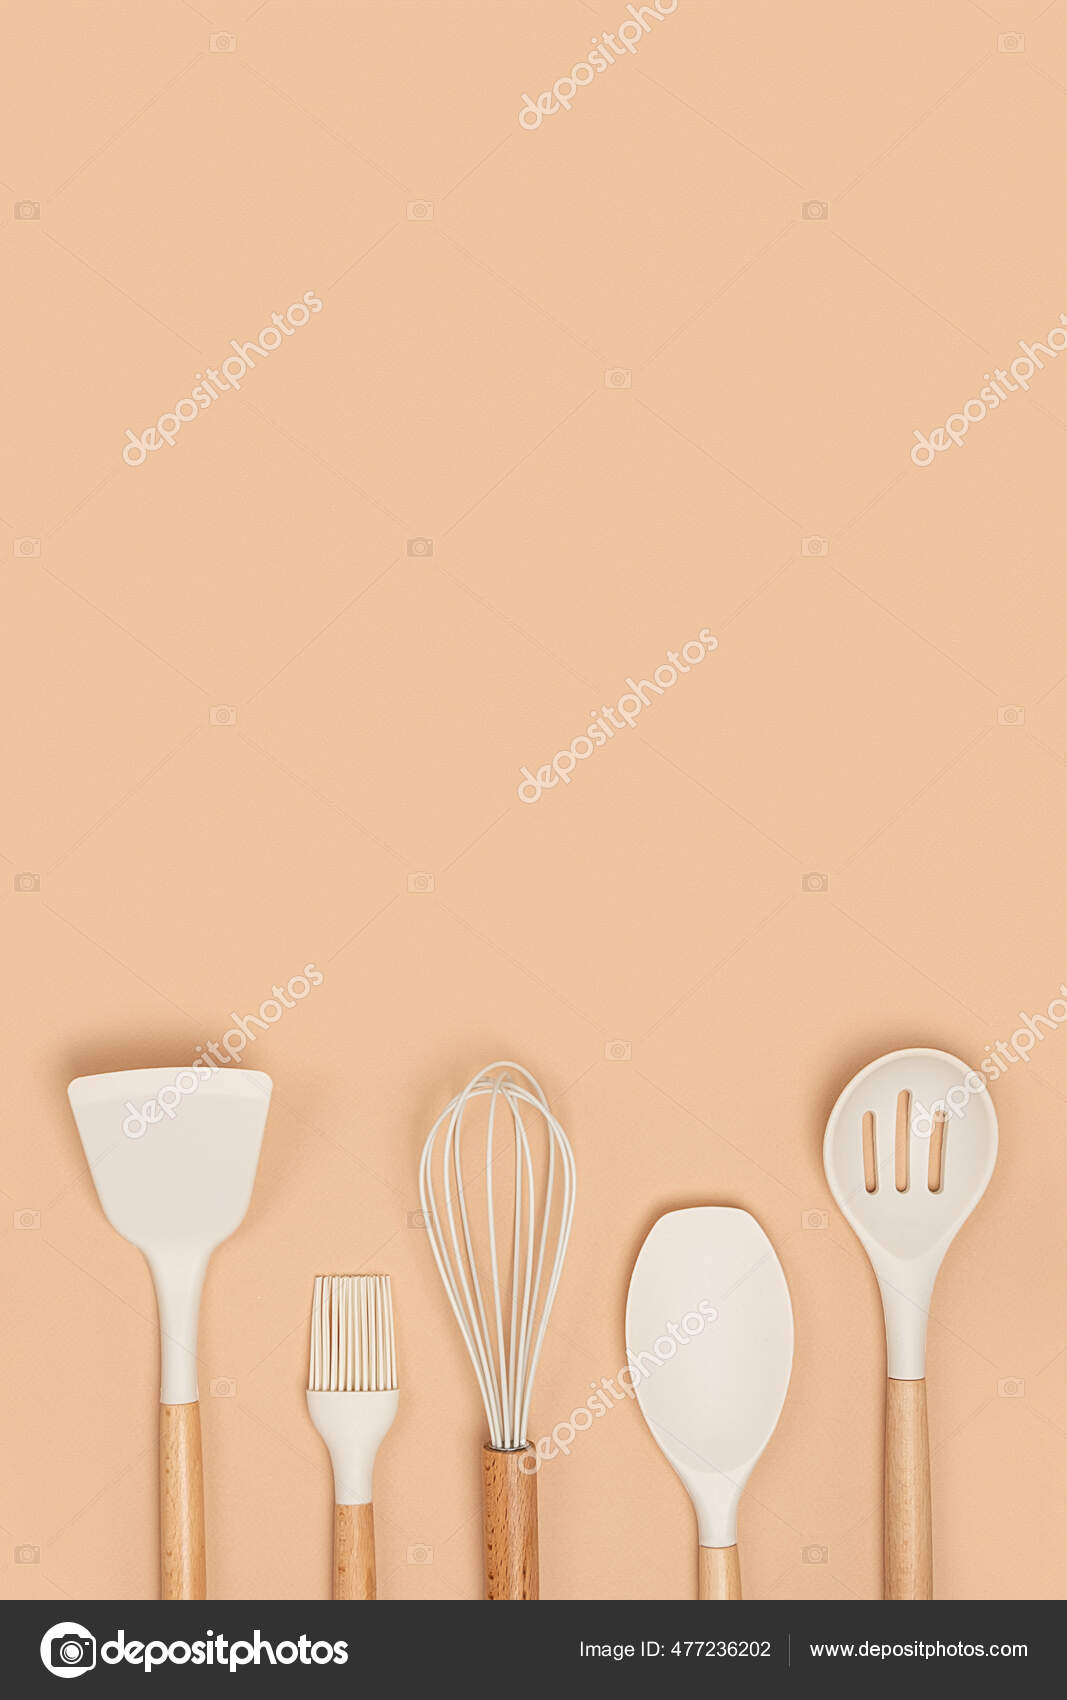 https://st2.depositphotos.com/25011698/47723/i/1600/depositphotos_477236202-stock-photo-cooking-utensil-set-silicone-kitchen.jpg